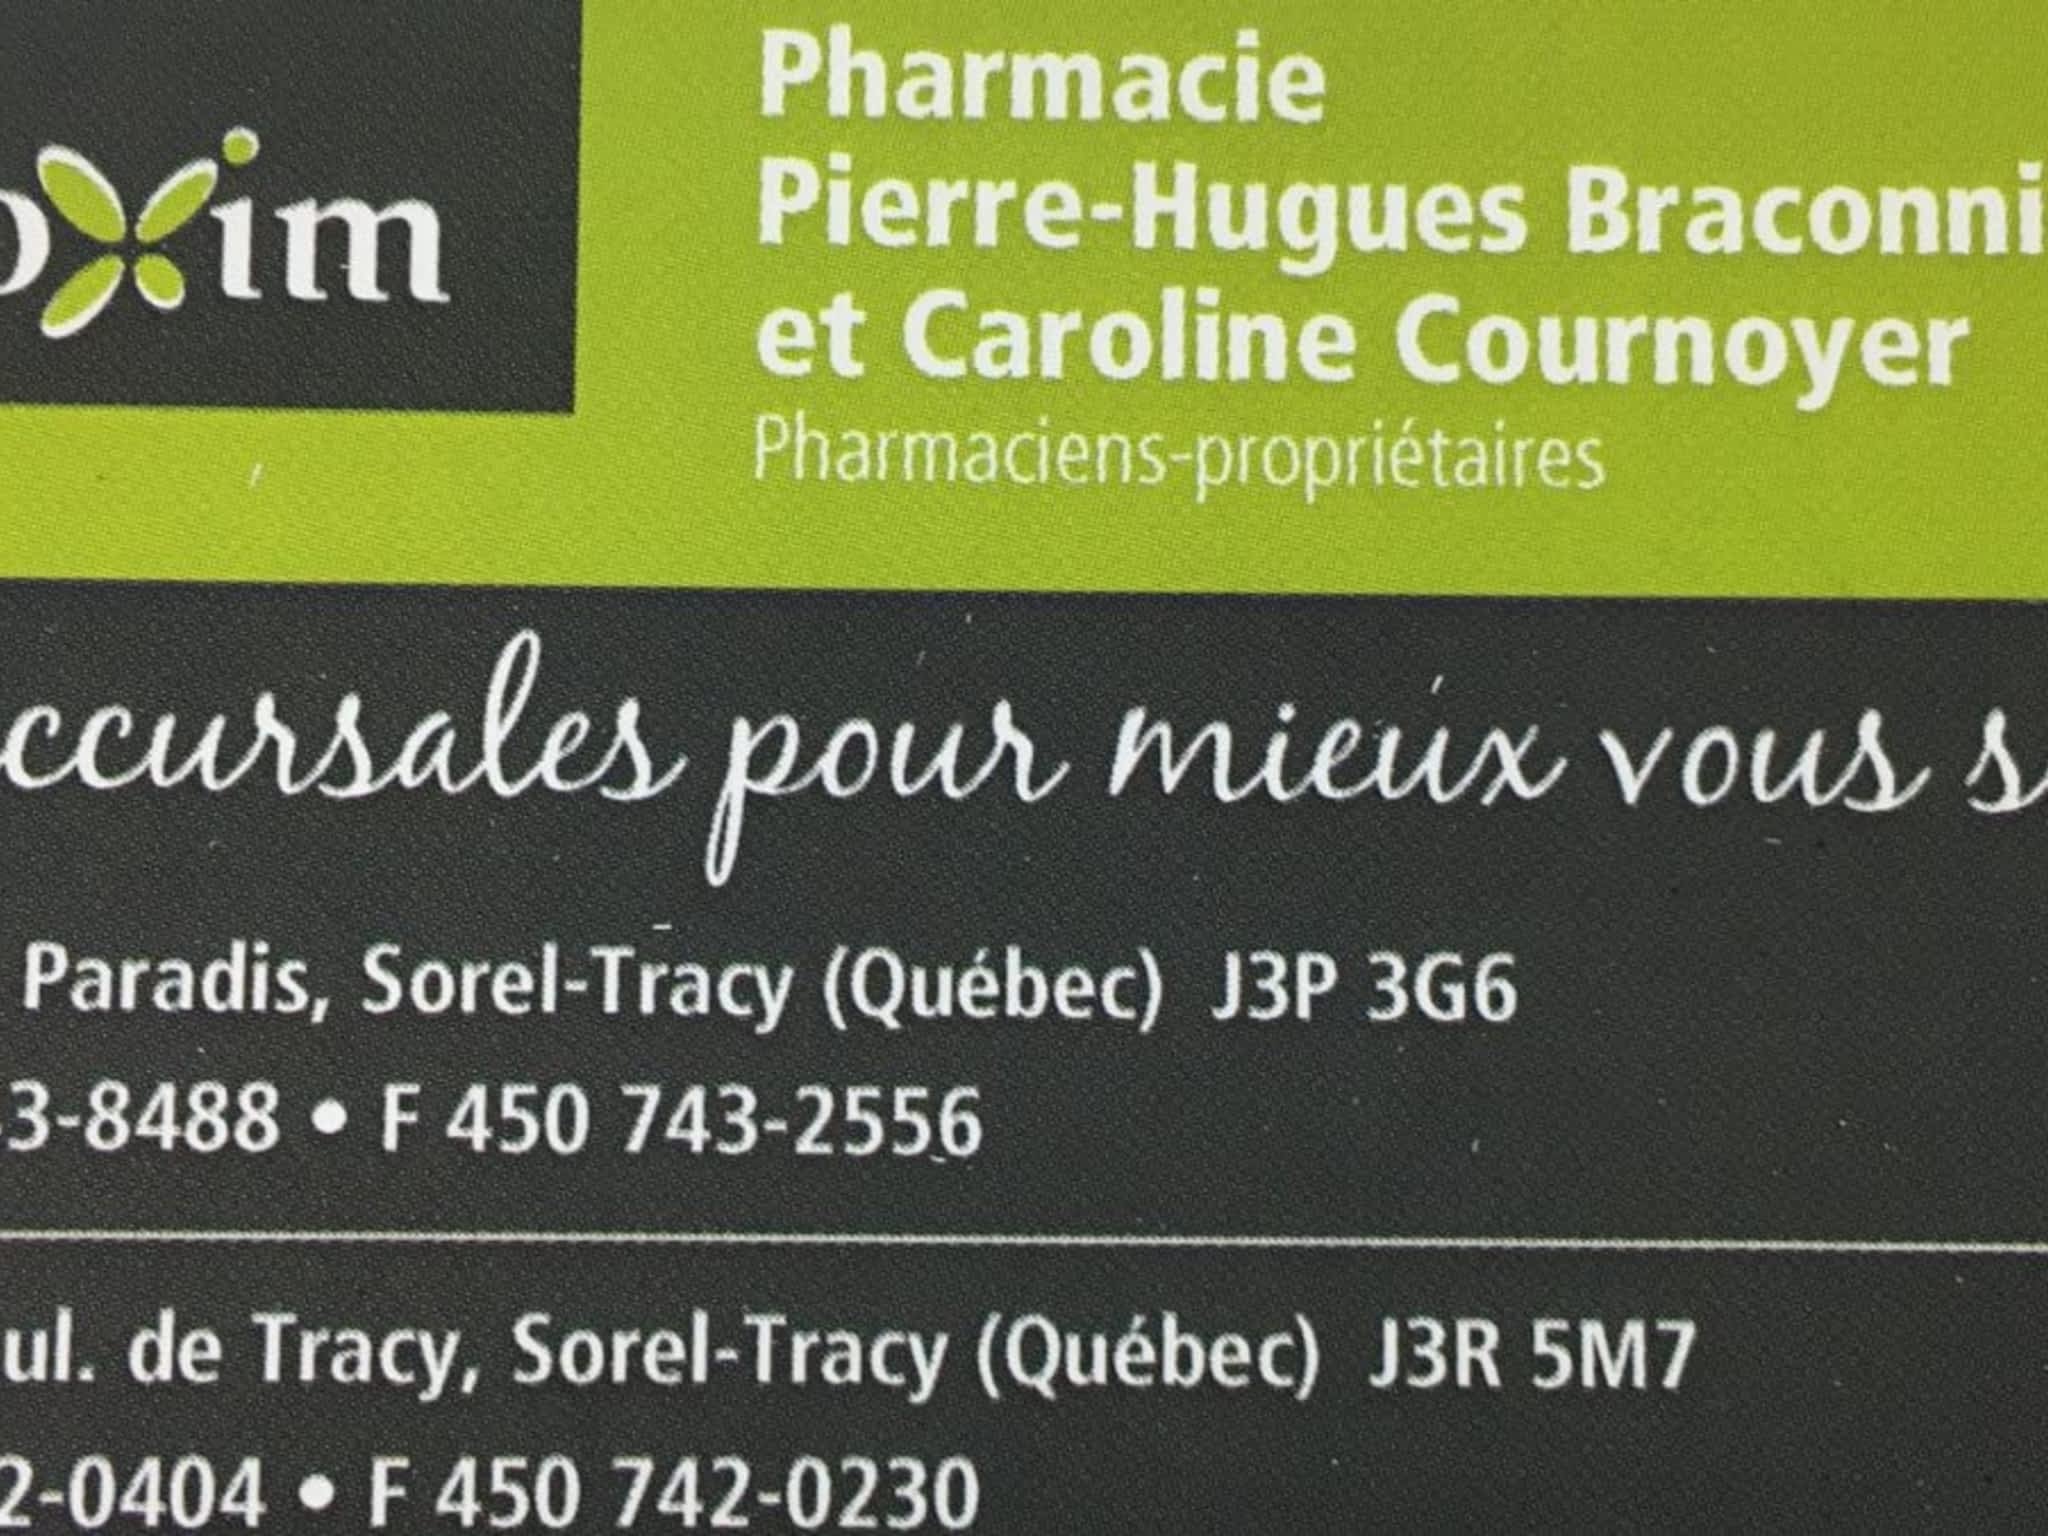 photo Proxim pharmacie affiliée - Braconnier et Cournoyer